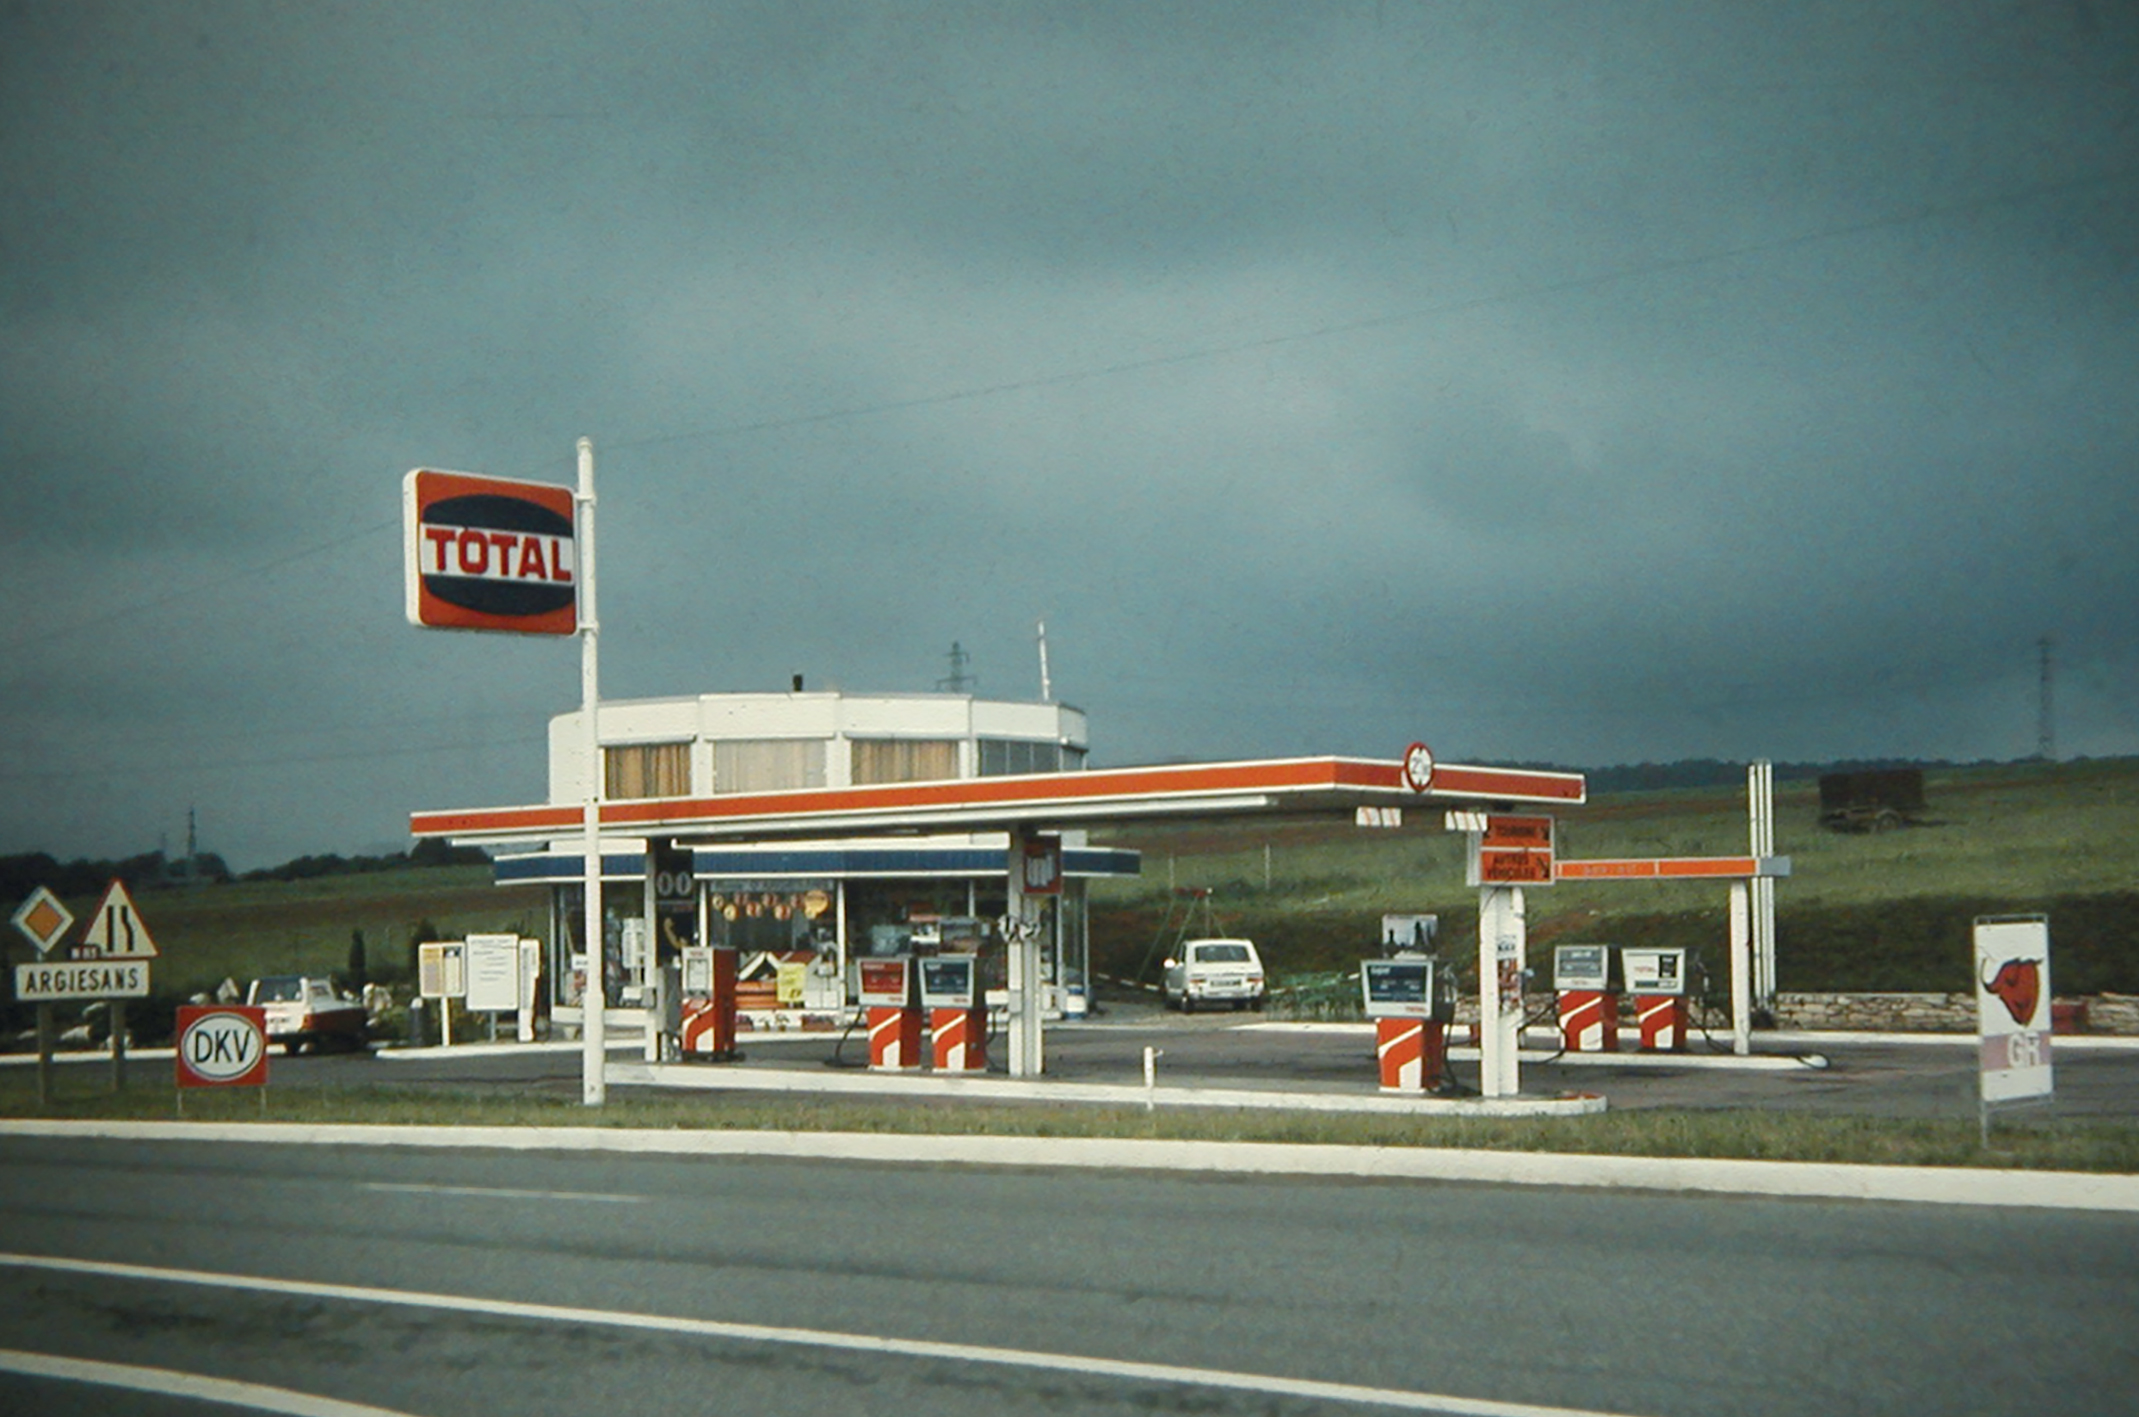 Total filling station, Argiesans, ca. 1970.